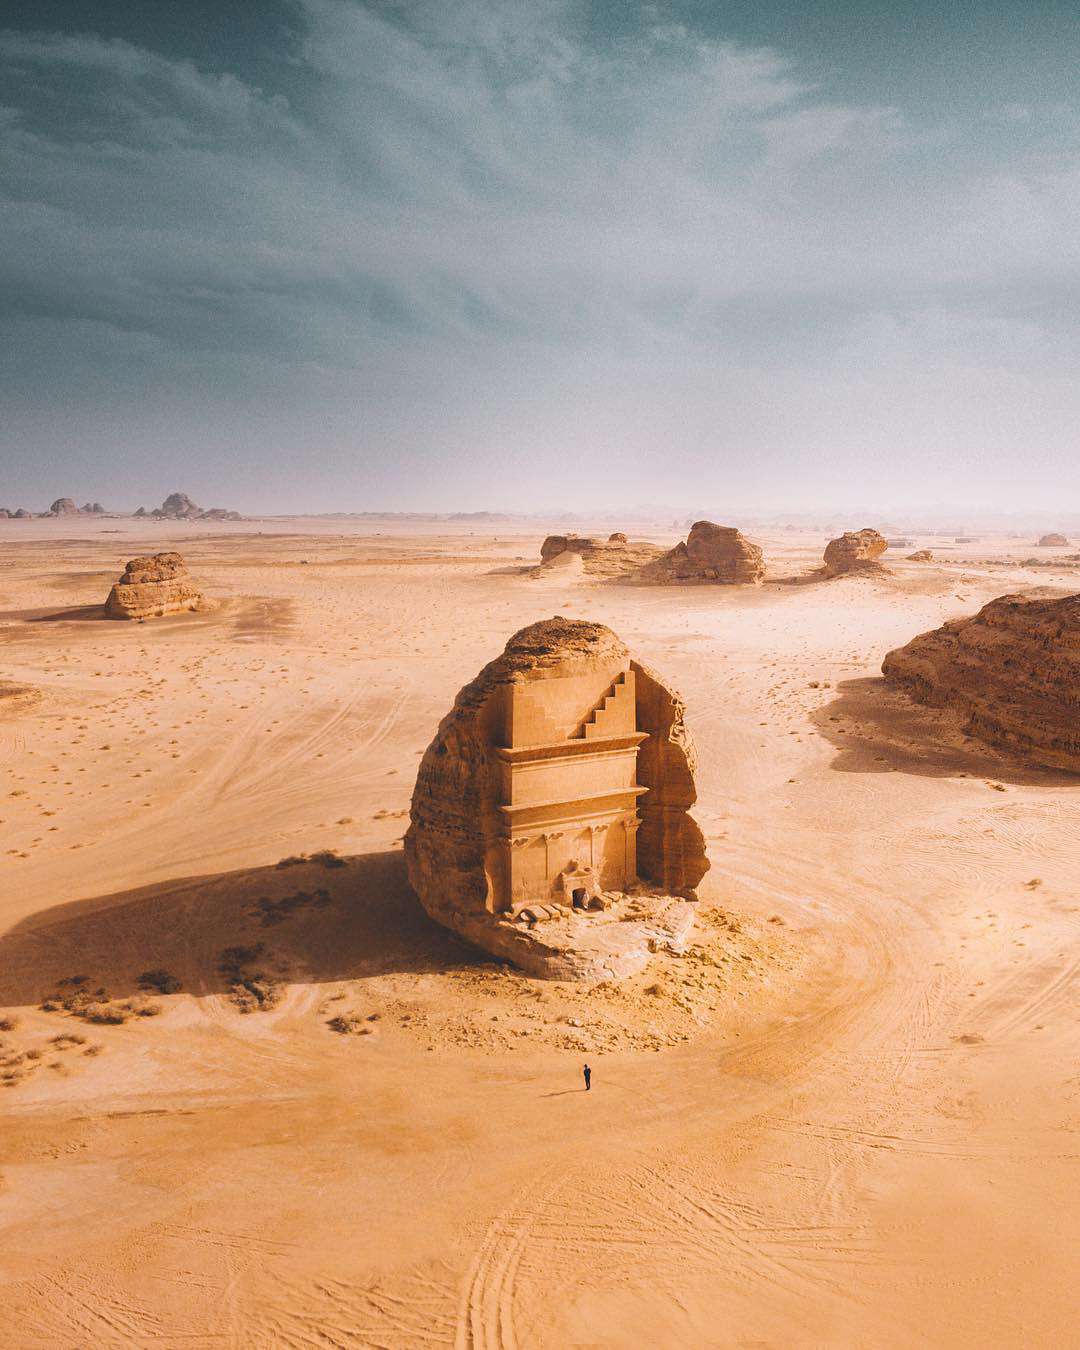 Madain Salih in the desert of Saudi Arabia - Saudi Arabia, sights, The photo, Nature, Peace, beauty, Adventures, Desert